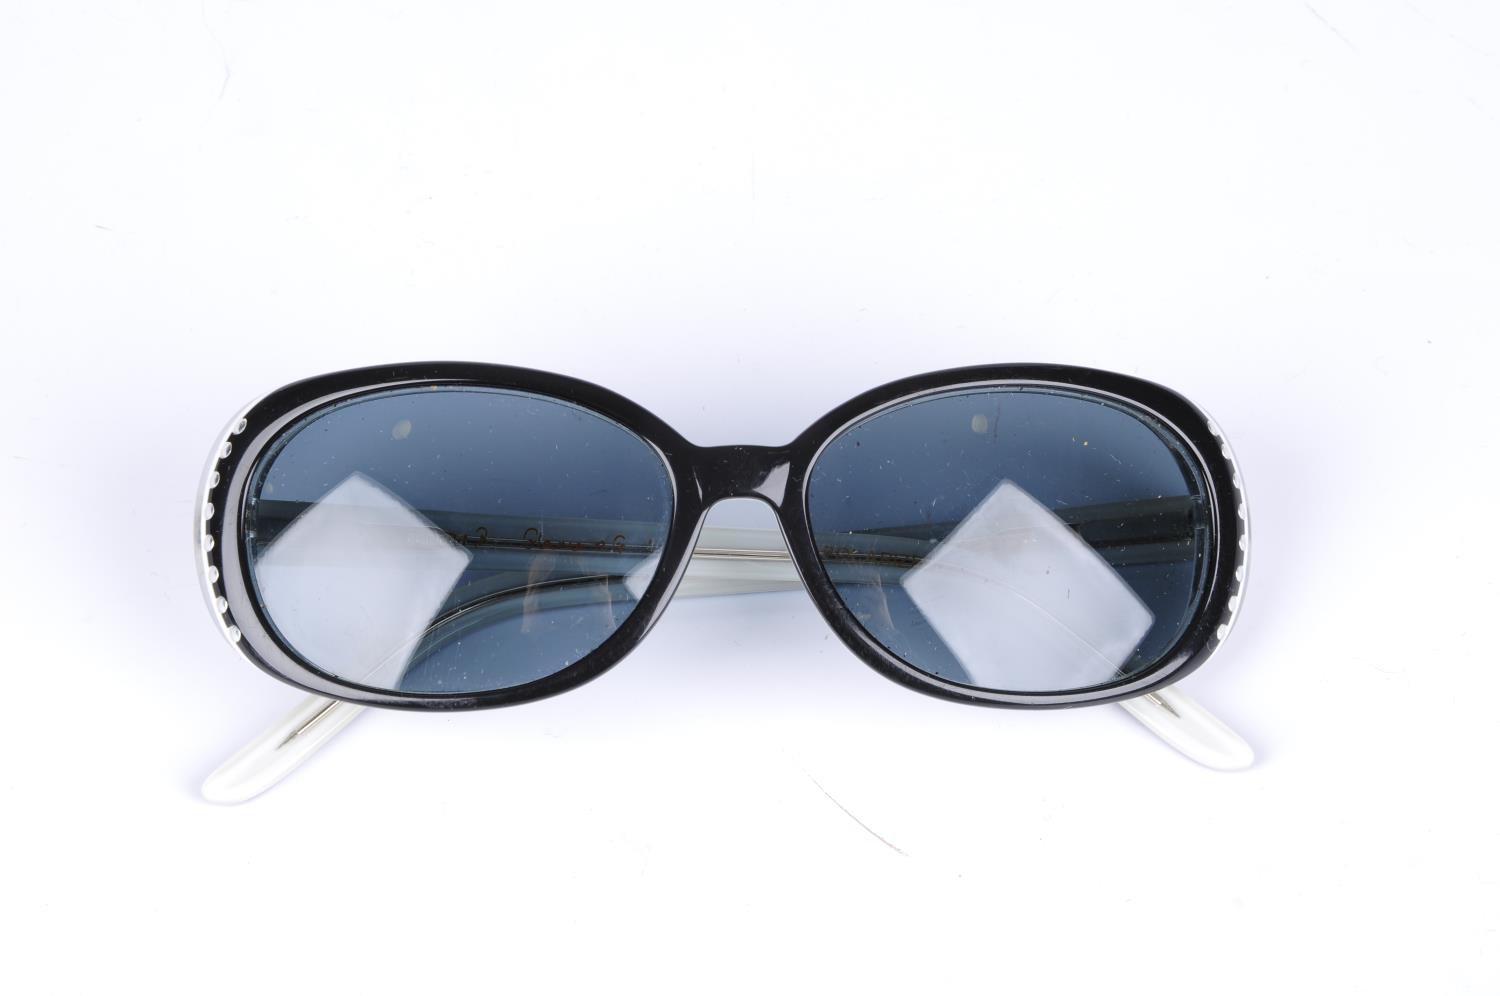 LULU GUINNESS - a pair of polarized sunglasses.